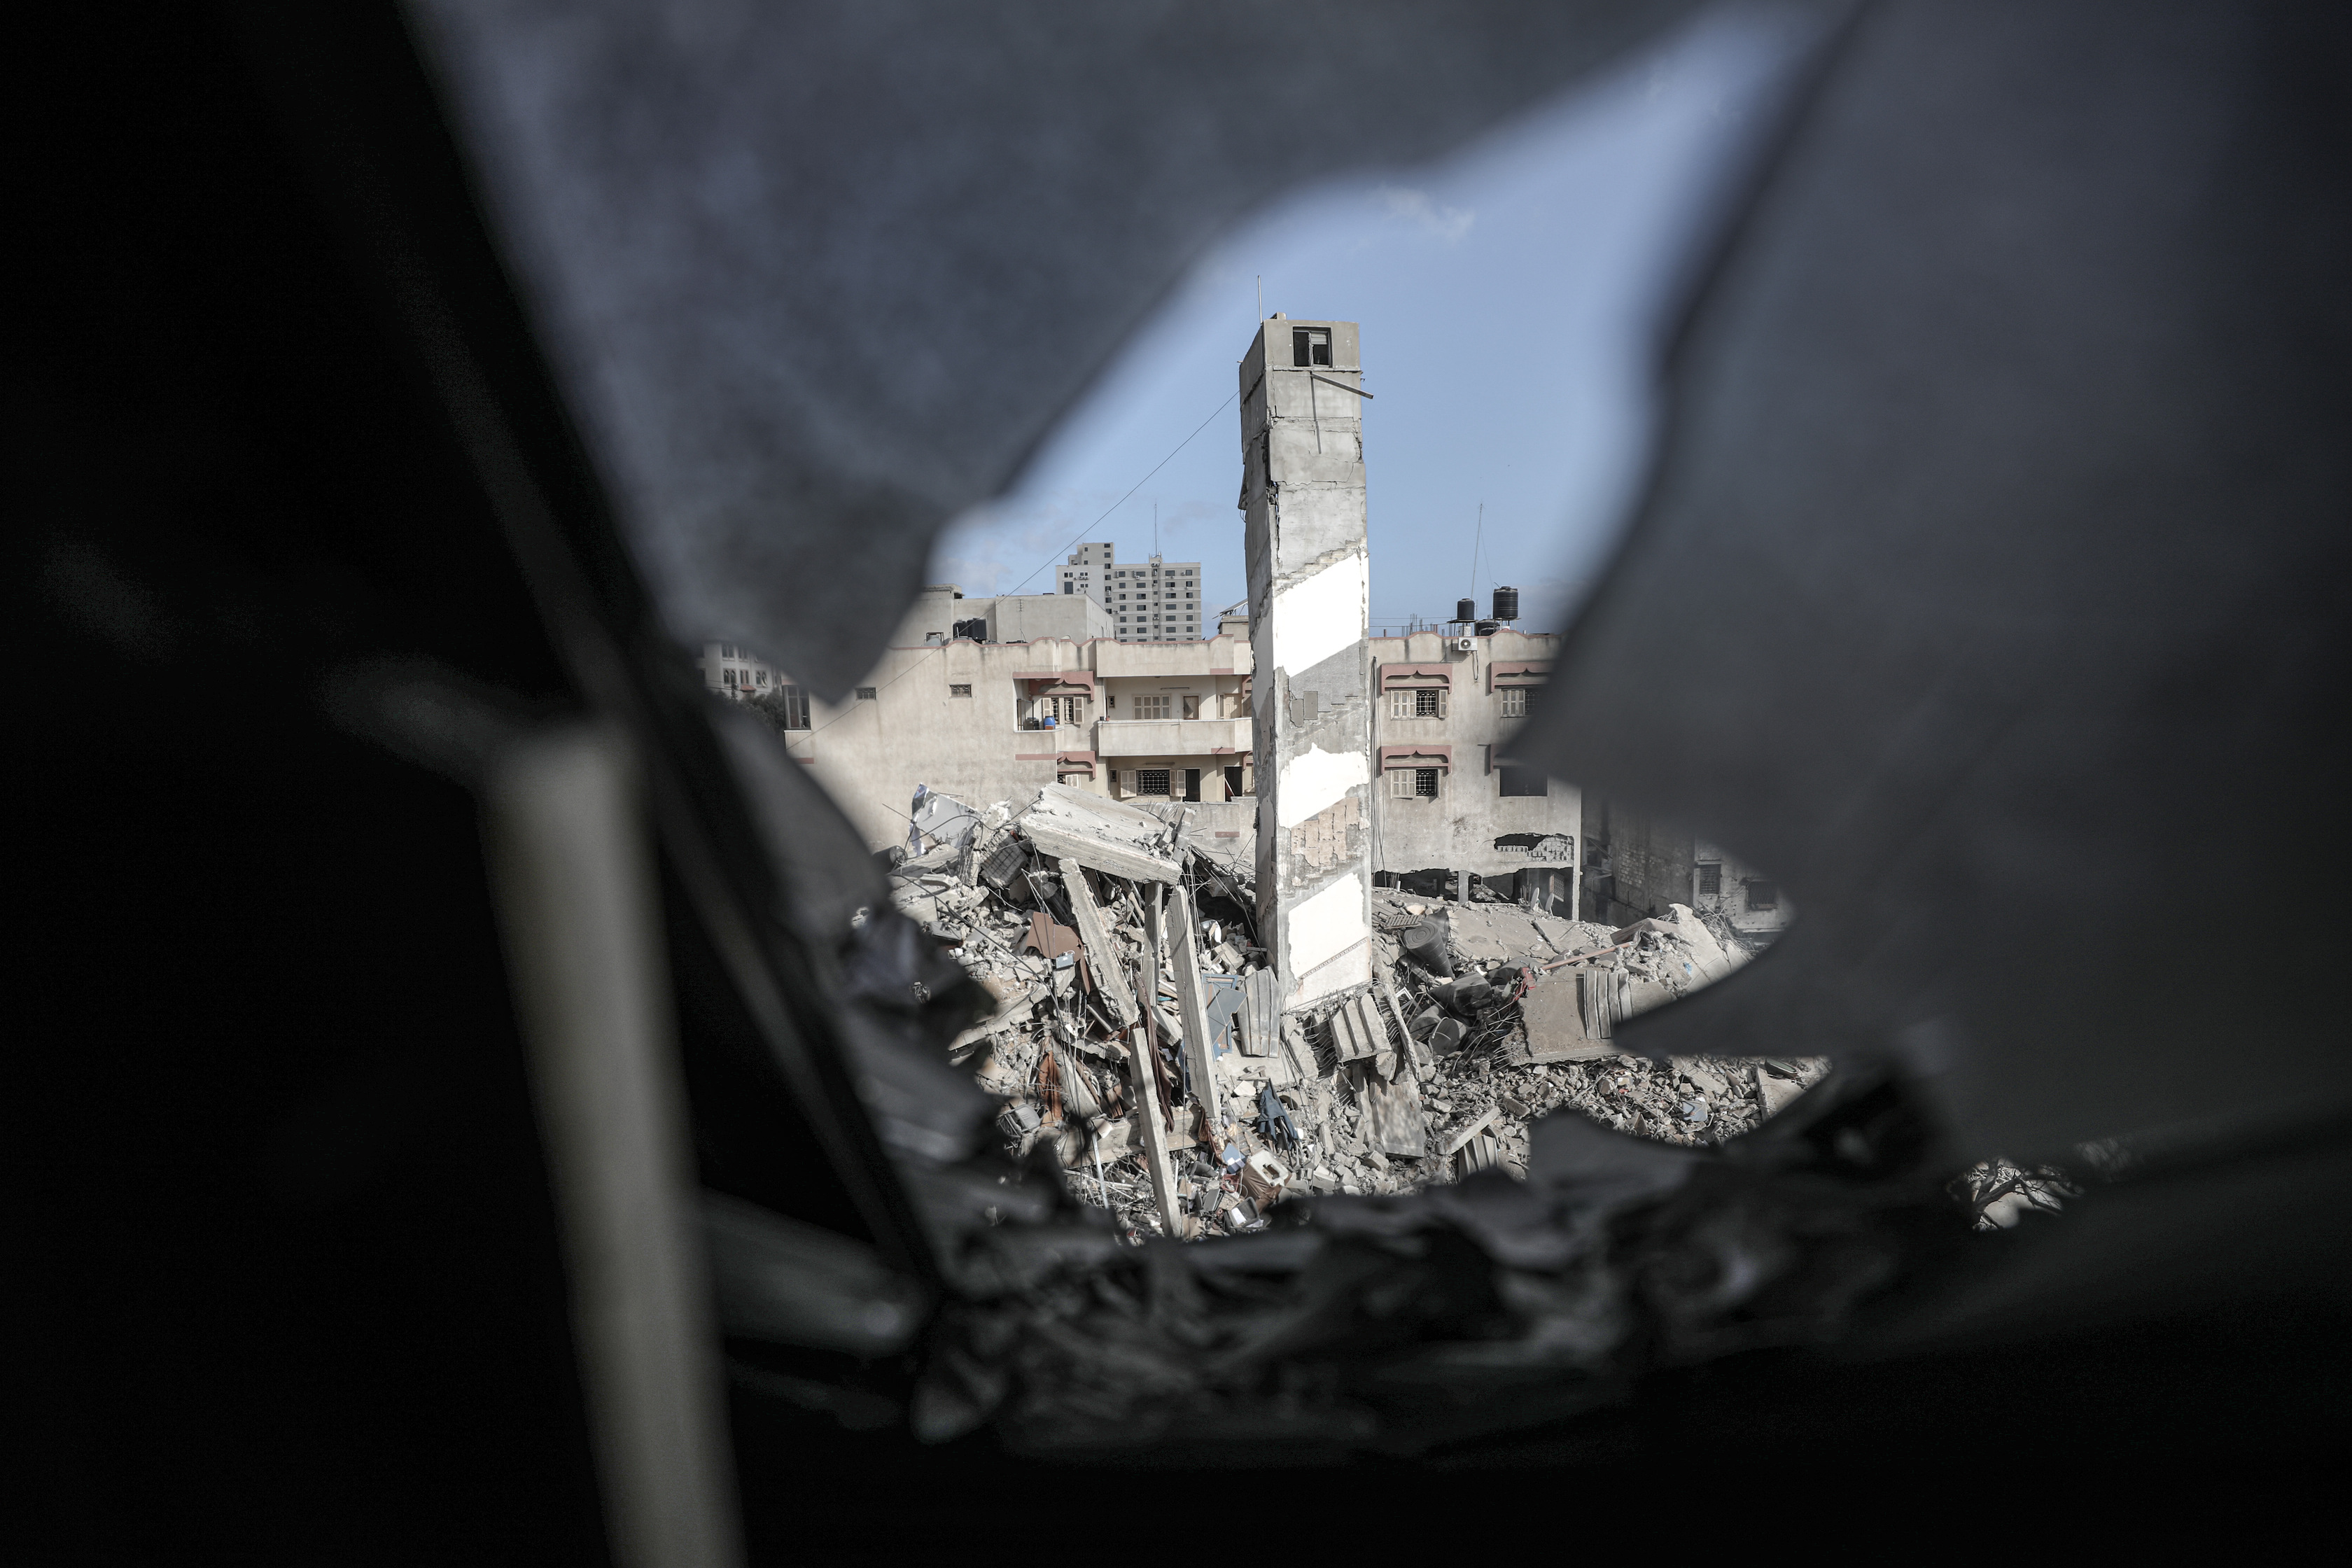 Israeli warplanes destroy 6-story building in Gaza